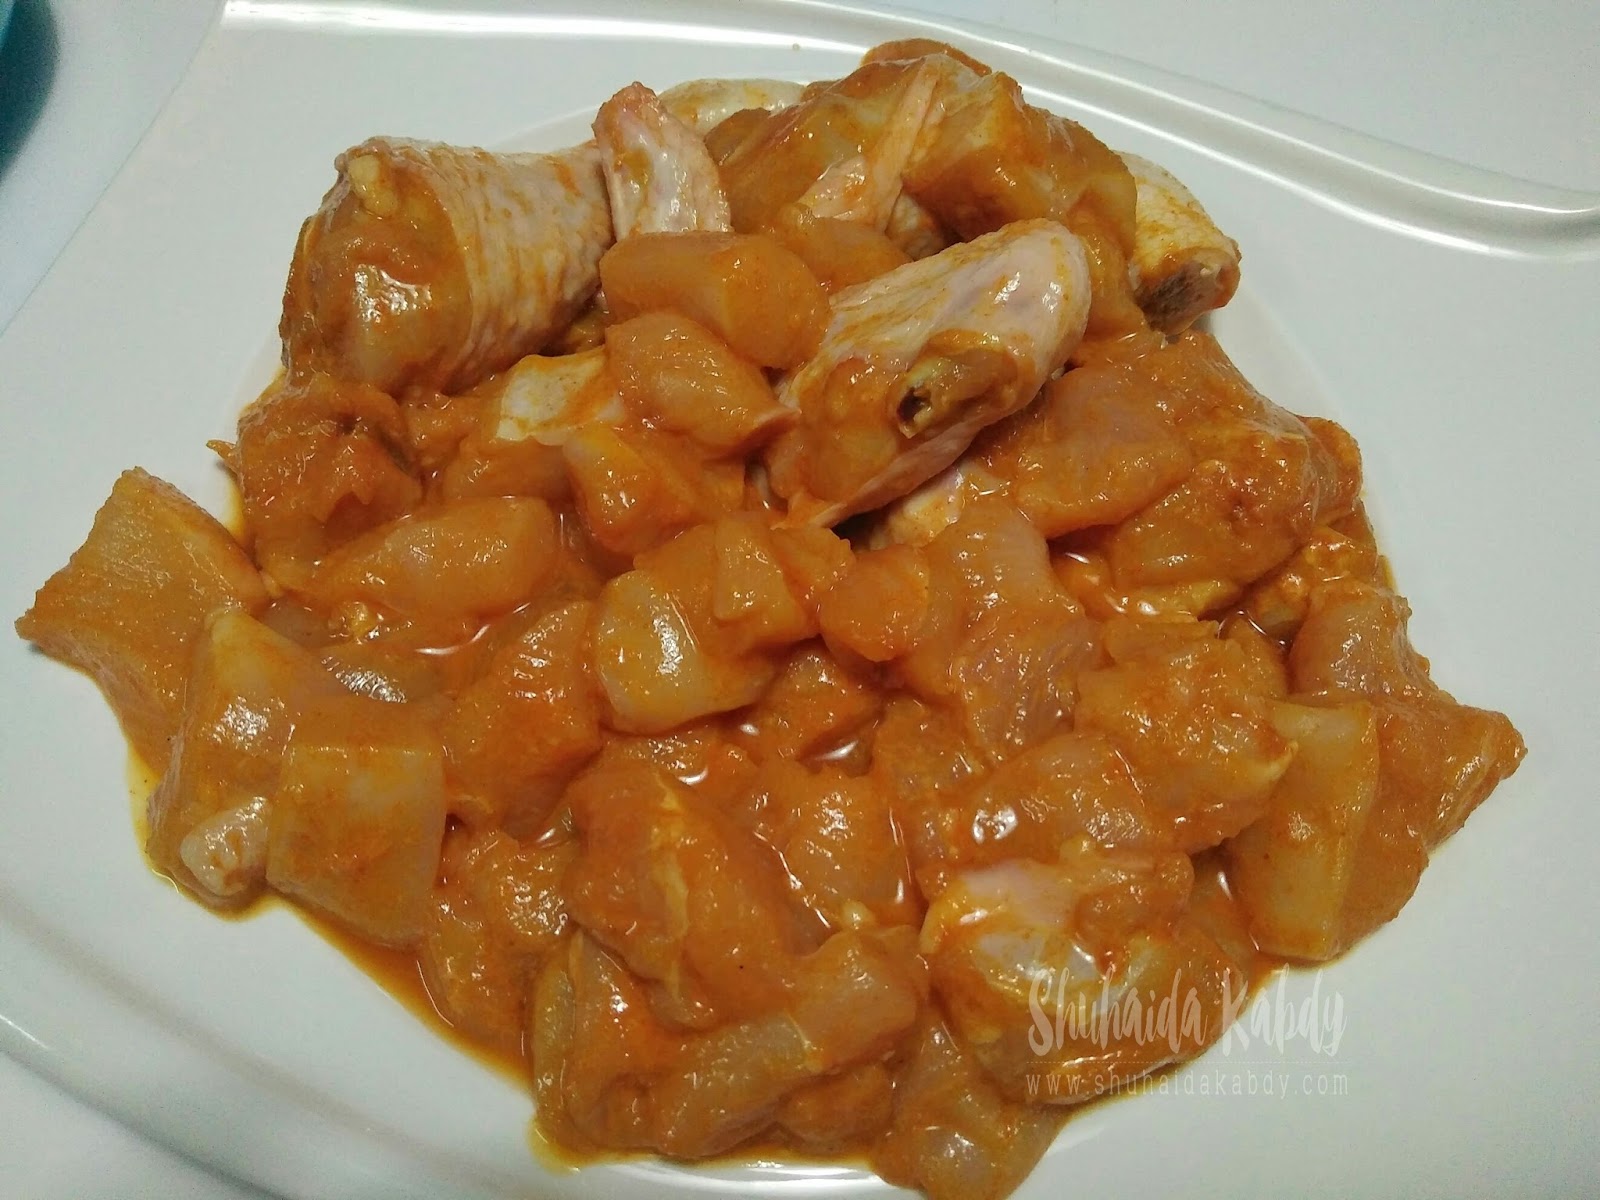 Resepi Ayam Masak Buttermilk - Shuhaida Kabdy